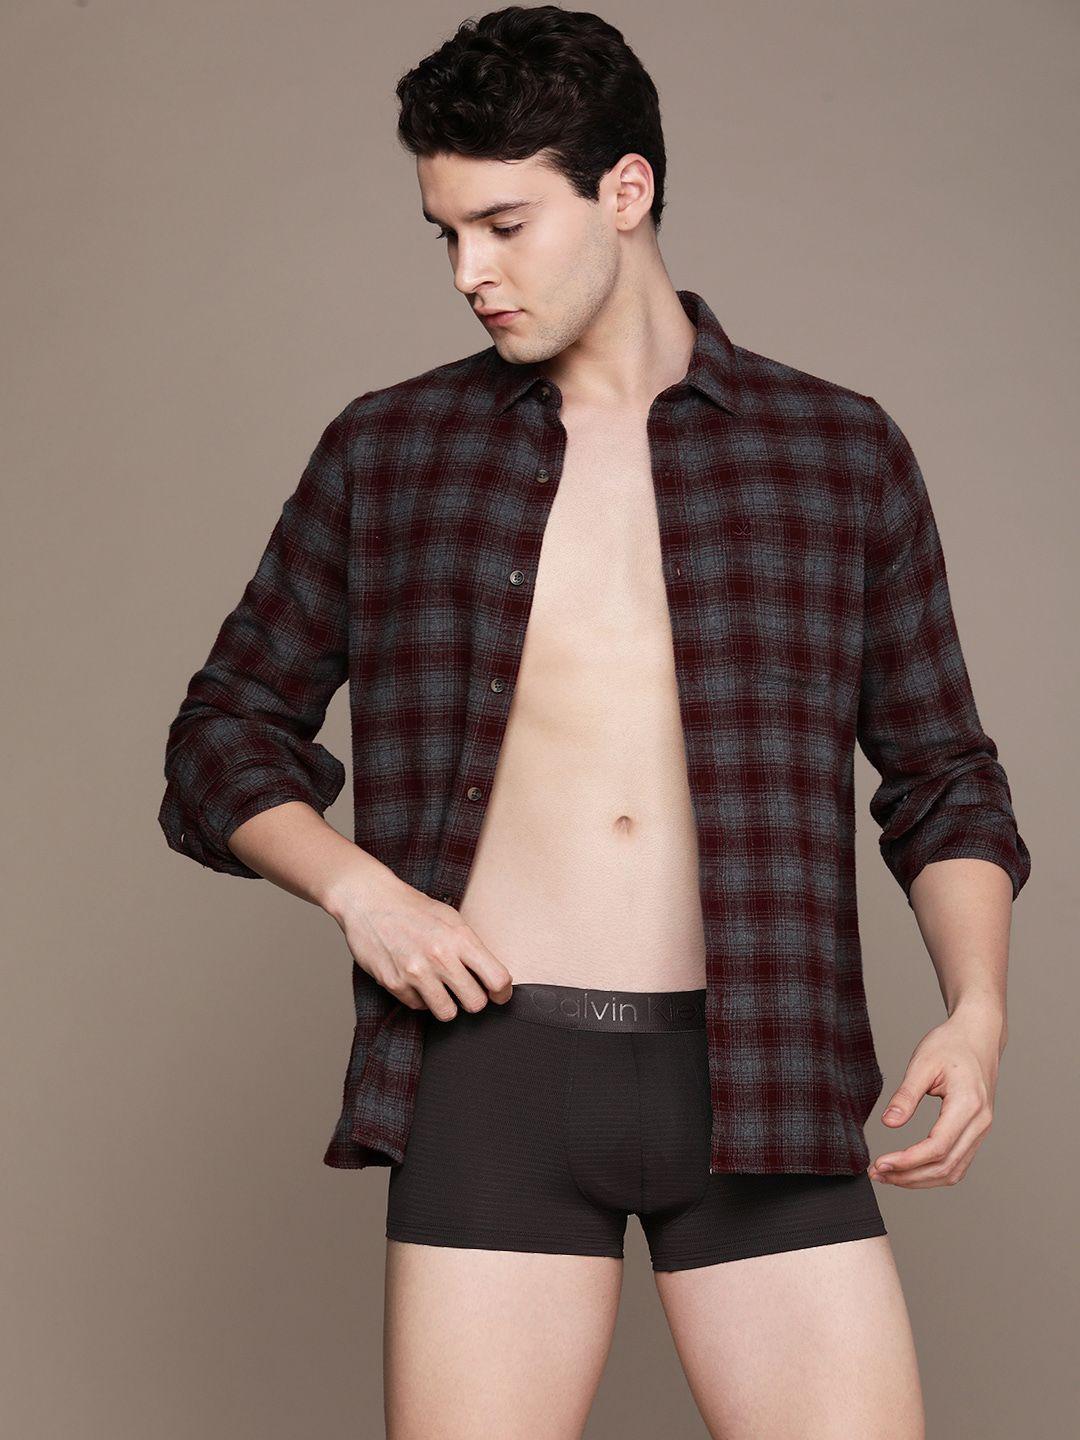 calvin klein underwear men self design low rise trunks nb3798lgv-lgv-espresso